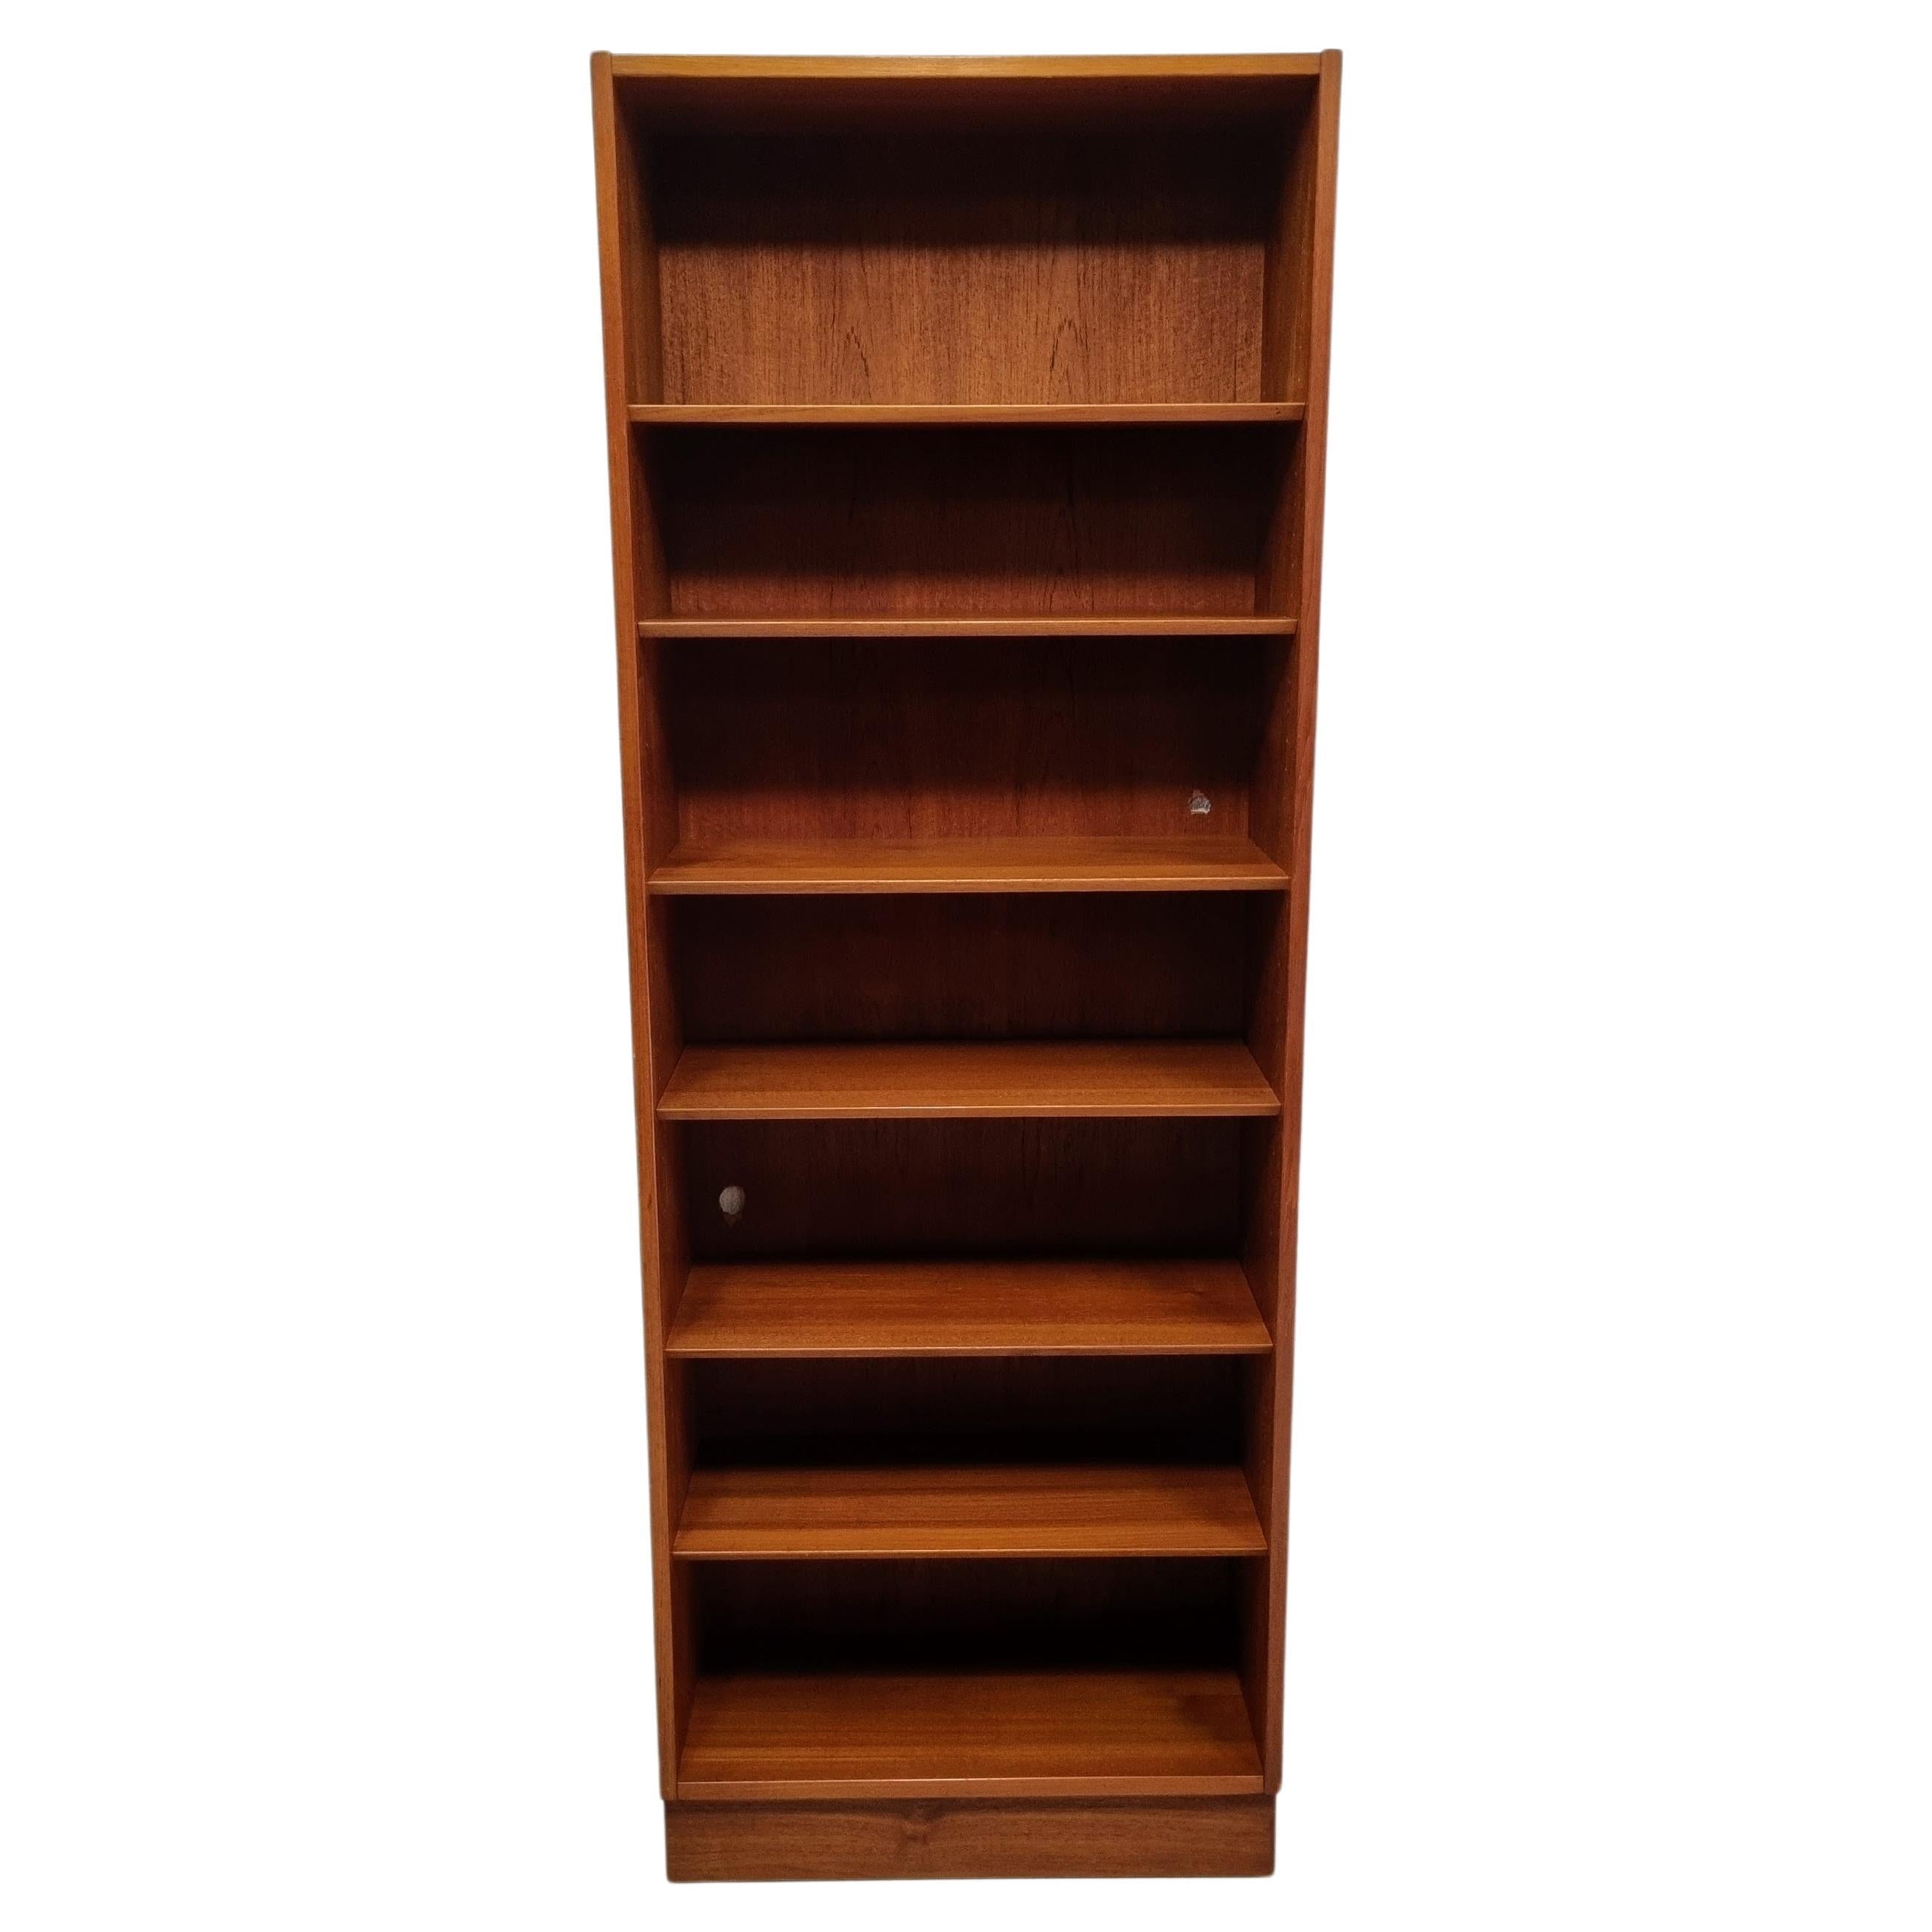 Teak bookcase by Hundevad & Co.